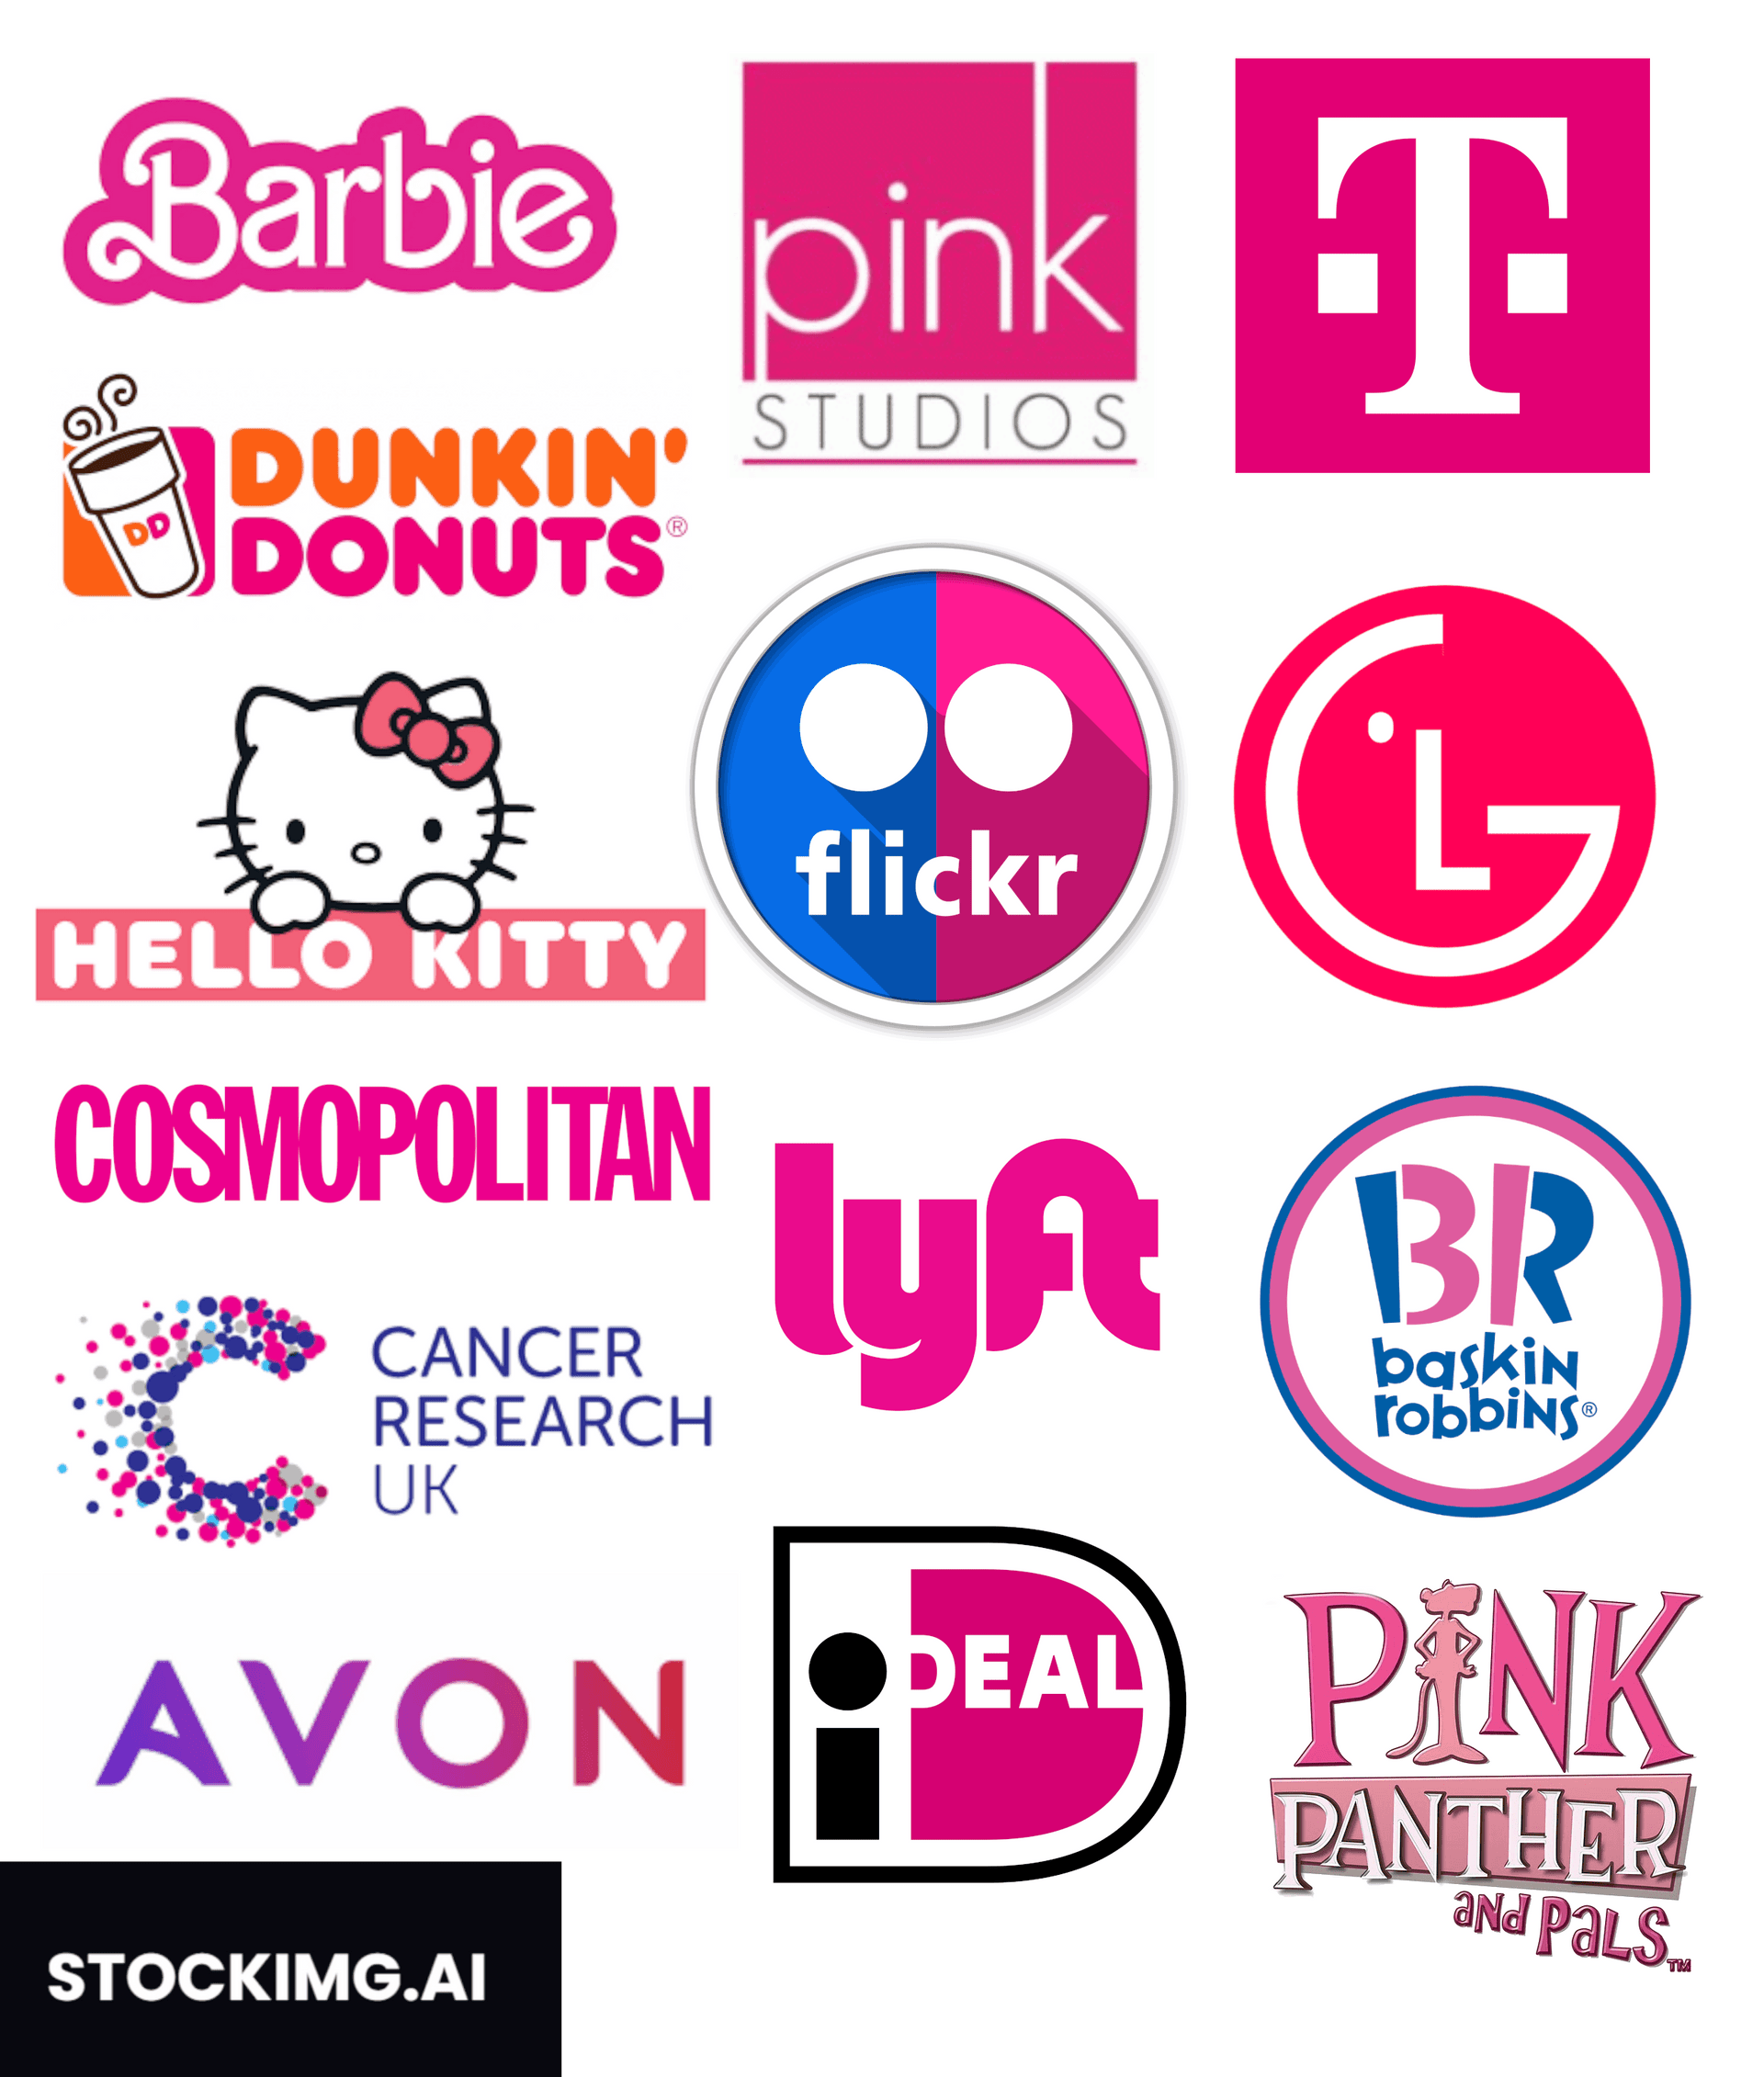 pink logos gallery including, Hello Kitty, Barbie, Dunkin', Cosmopolitan, Avon, t-mobile, LG, baskin robbins, pink panther